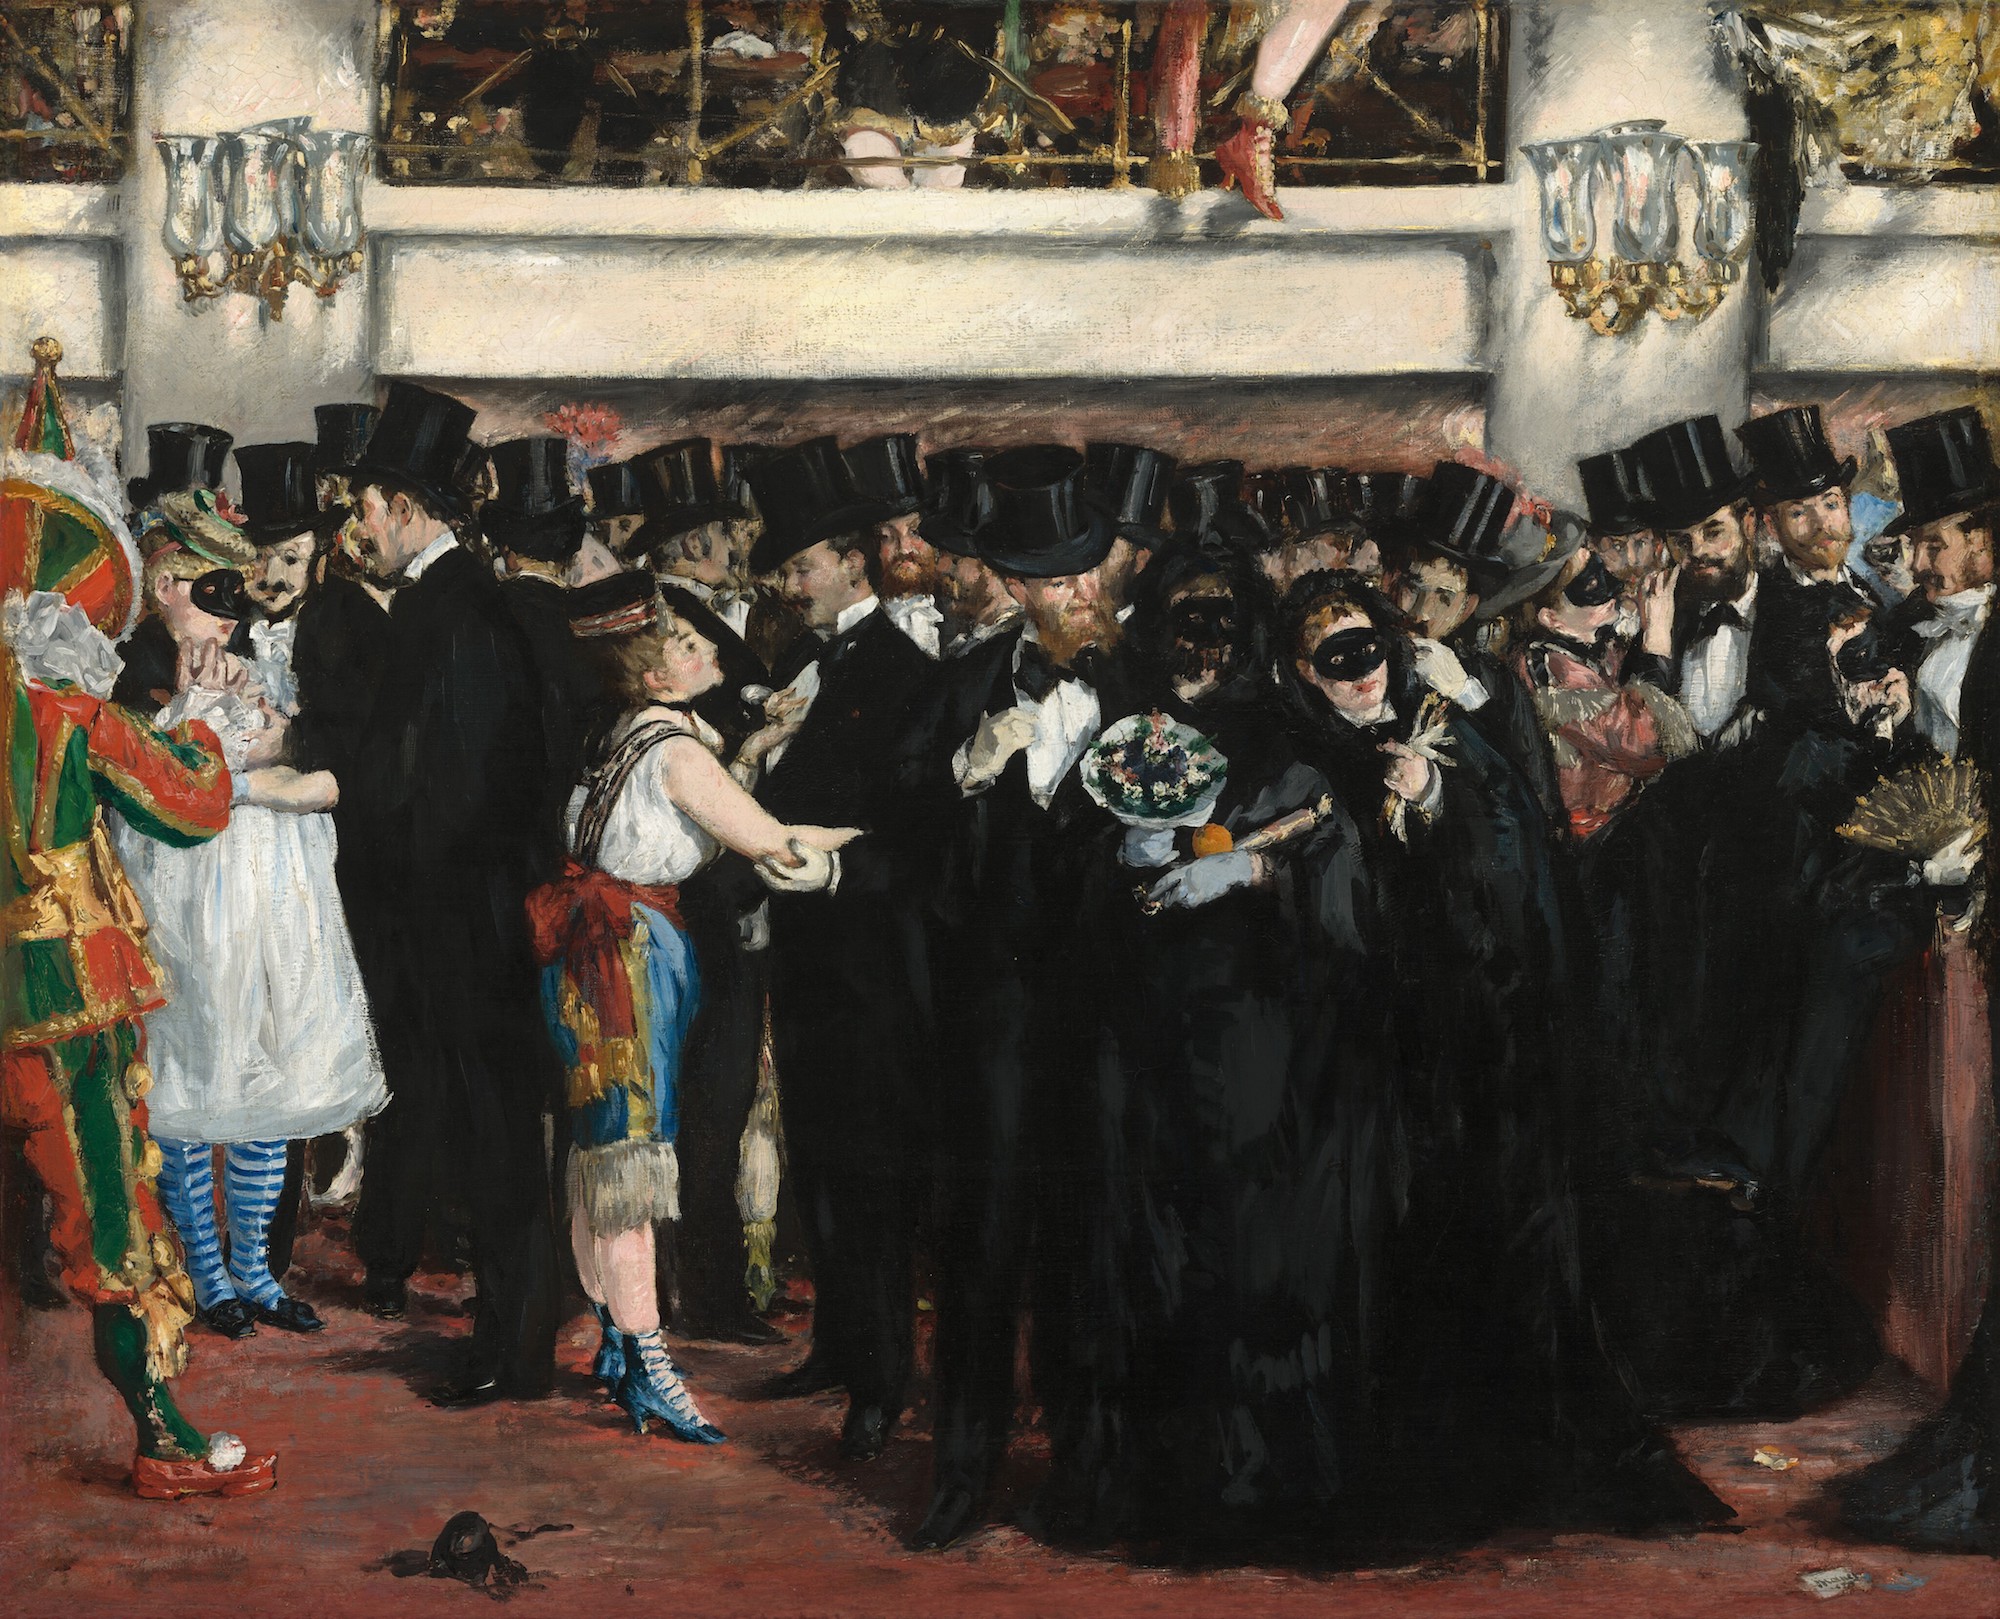 Édouard Manet (1832-1883), Le Bal de l’Opéra, 1874. Refusé au Salon de 1874. Huile sur toile, 59,1 x 72,5 cm. Washington, National Gallery of Art. Photo courtesy National Gallery of Art, Washington